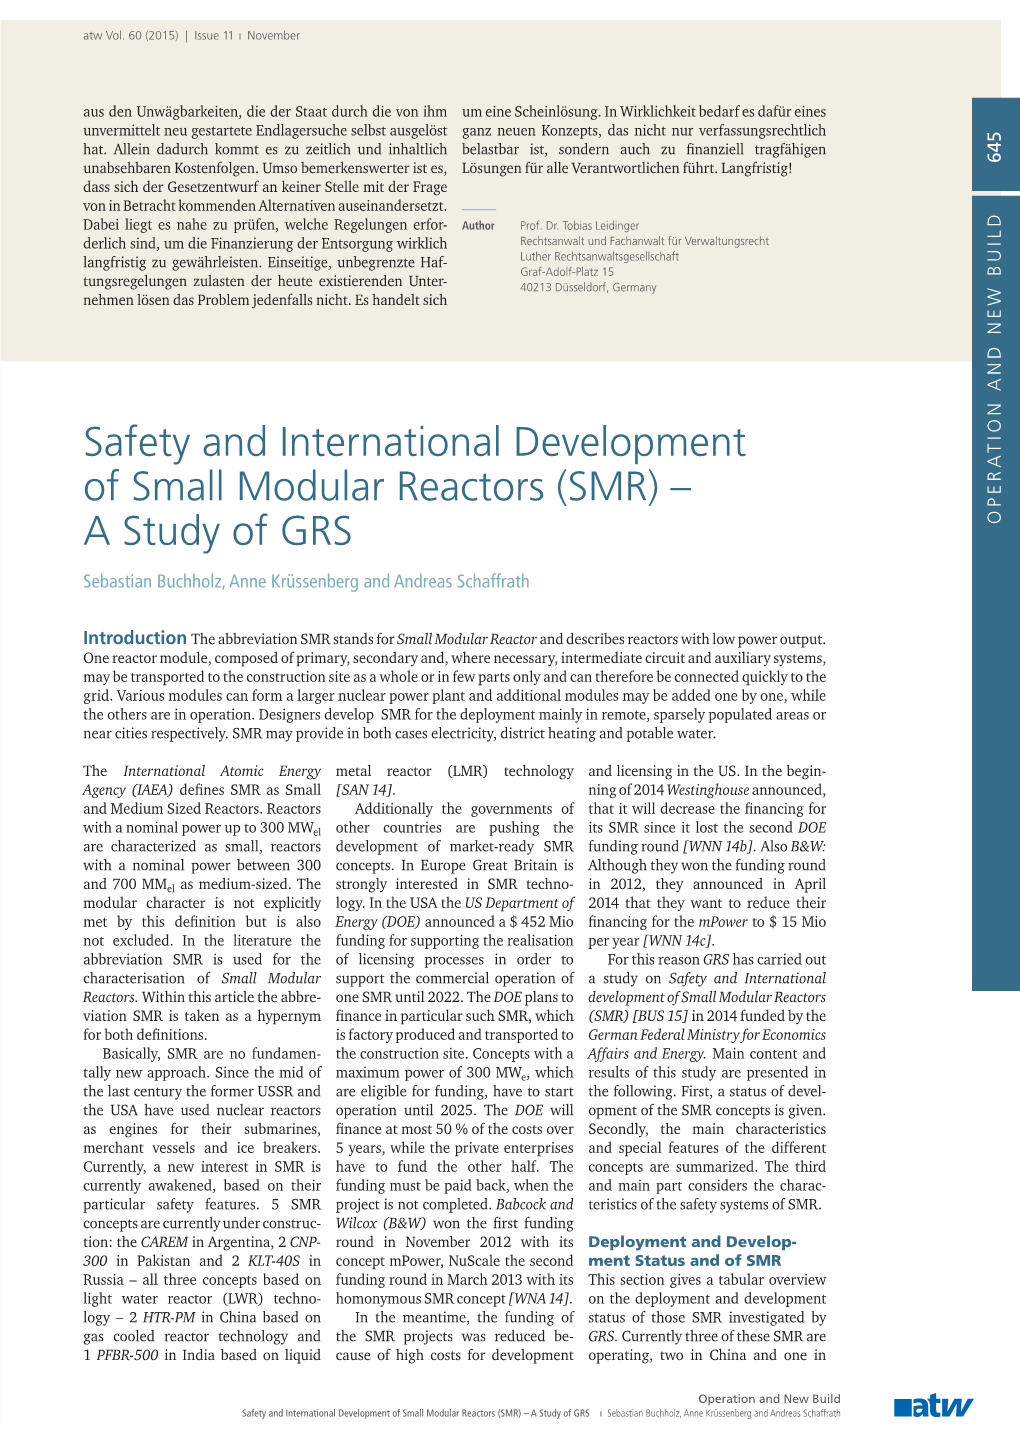 Safety and International Development of Small Modular Reactors